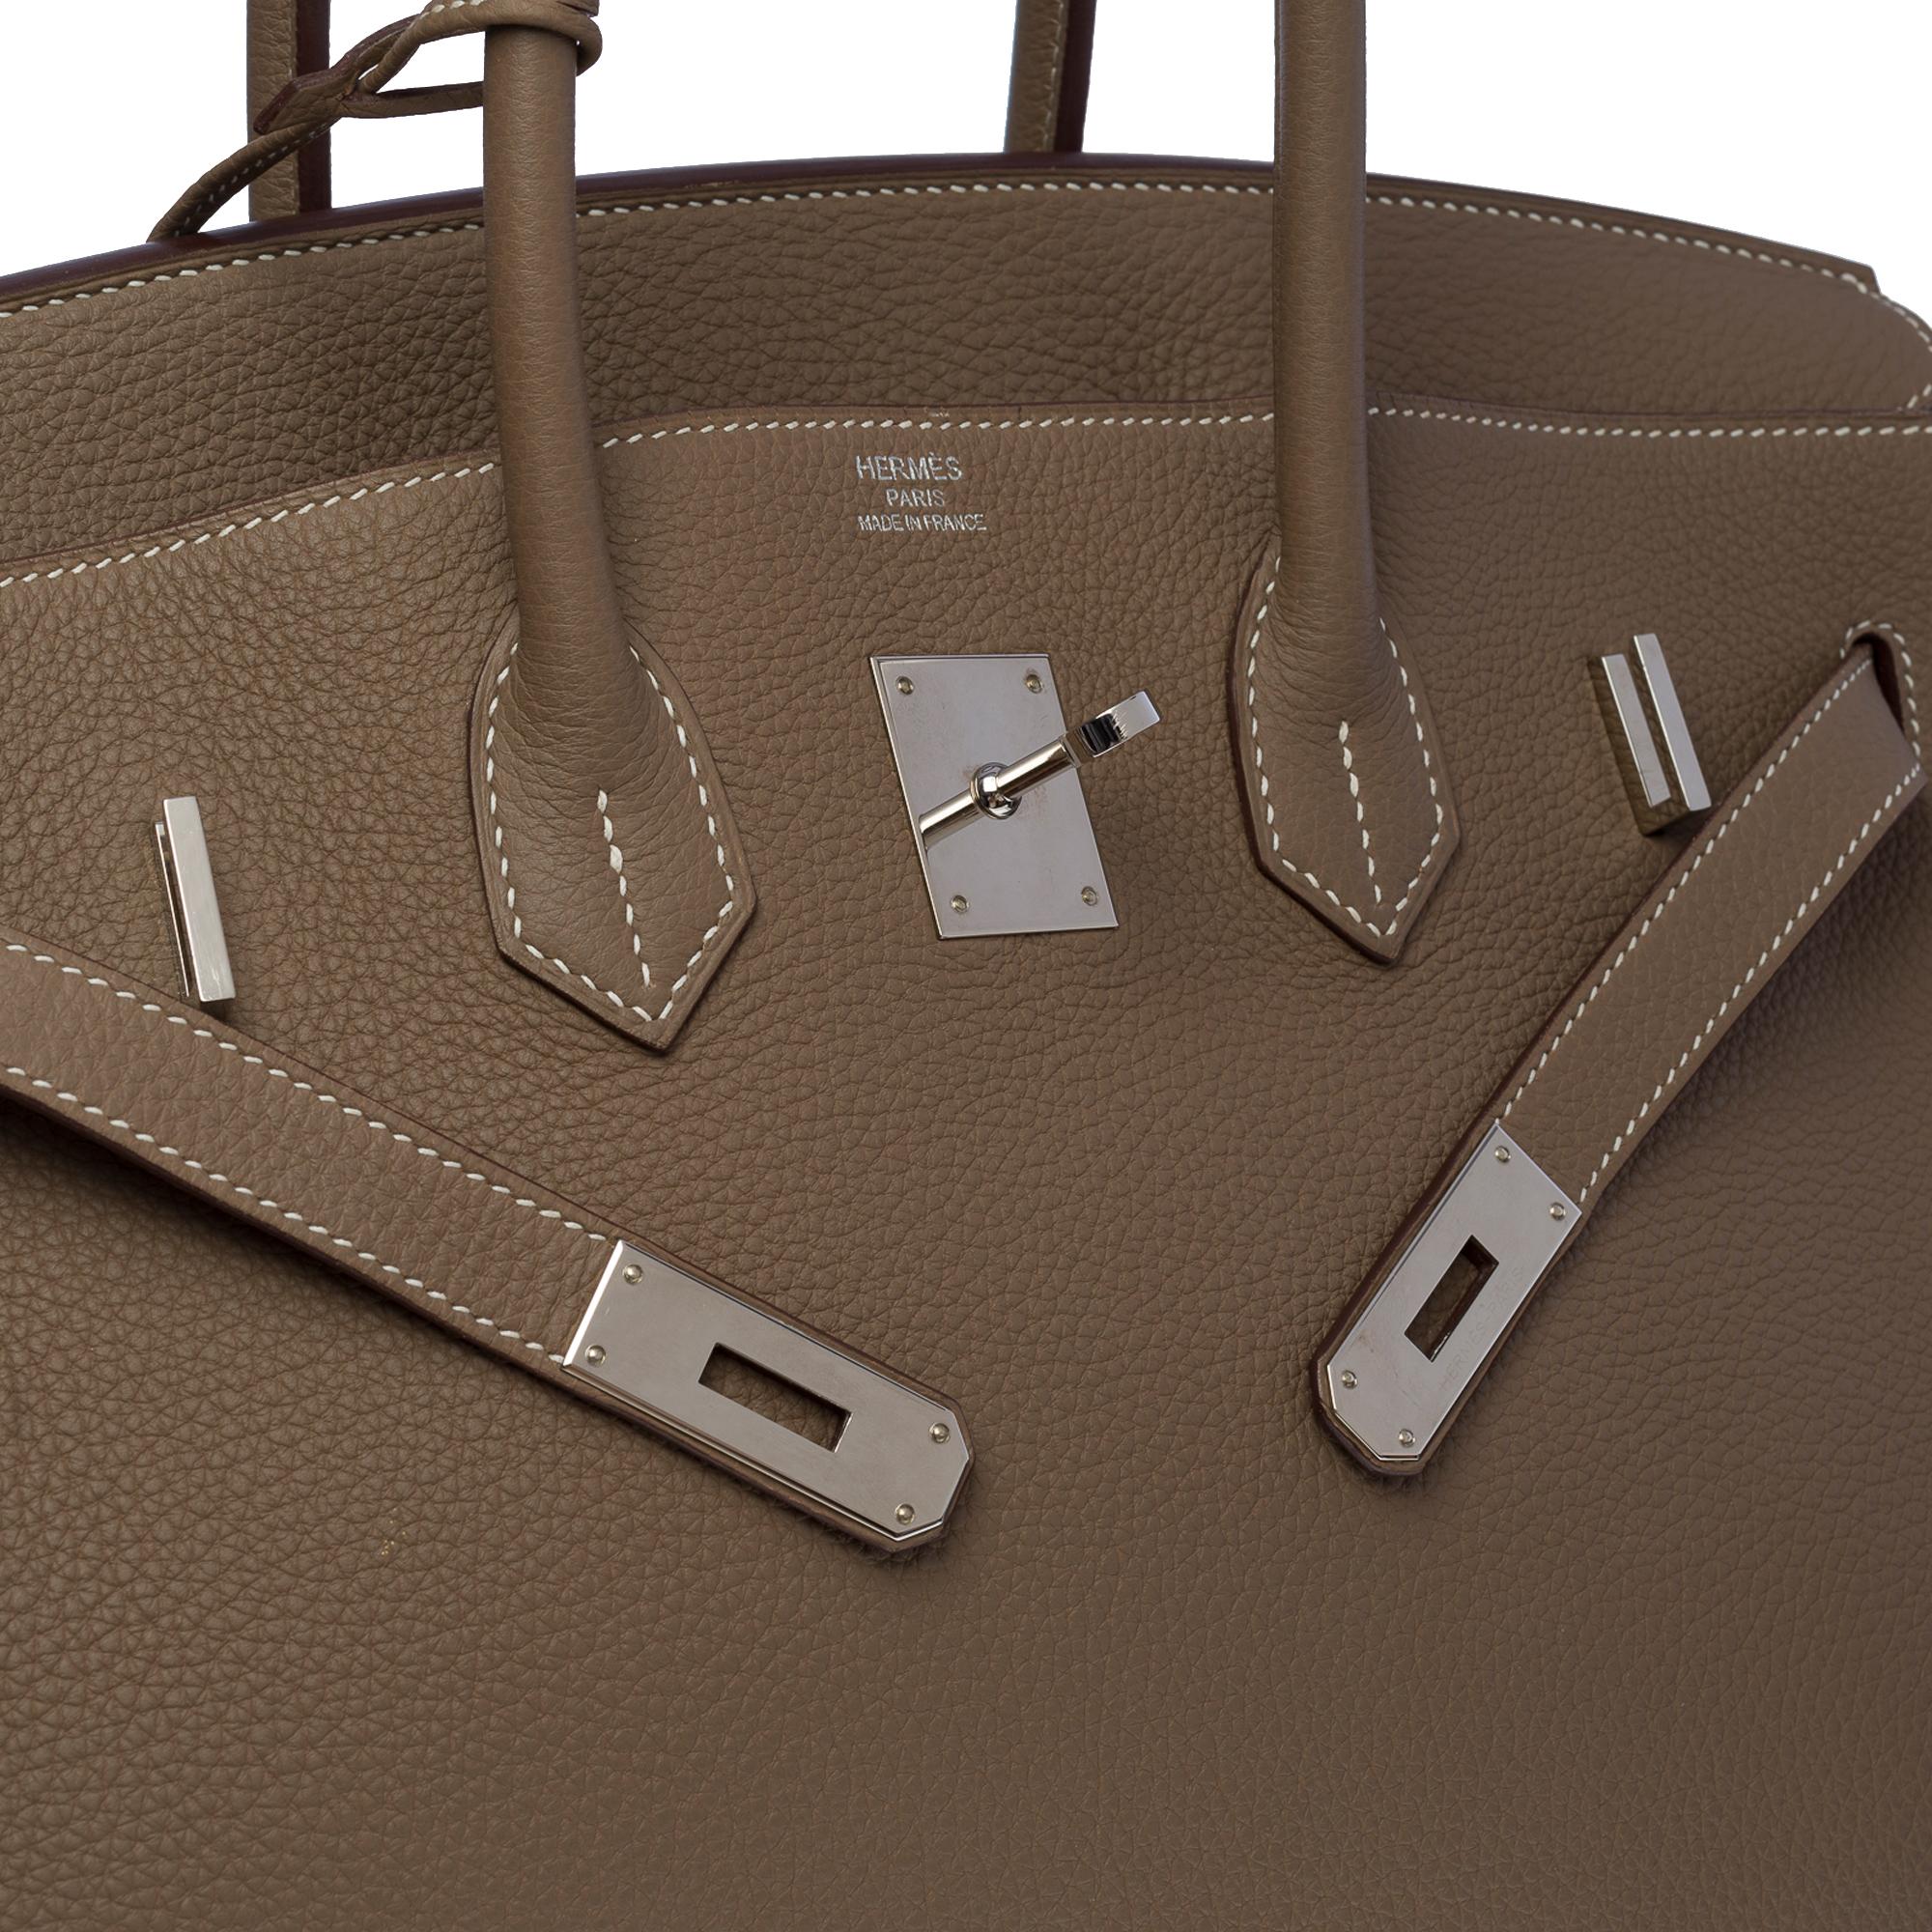 Brown Stunning Hermès Birkin 35 handbag in étoupe Togo leather, SHW